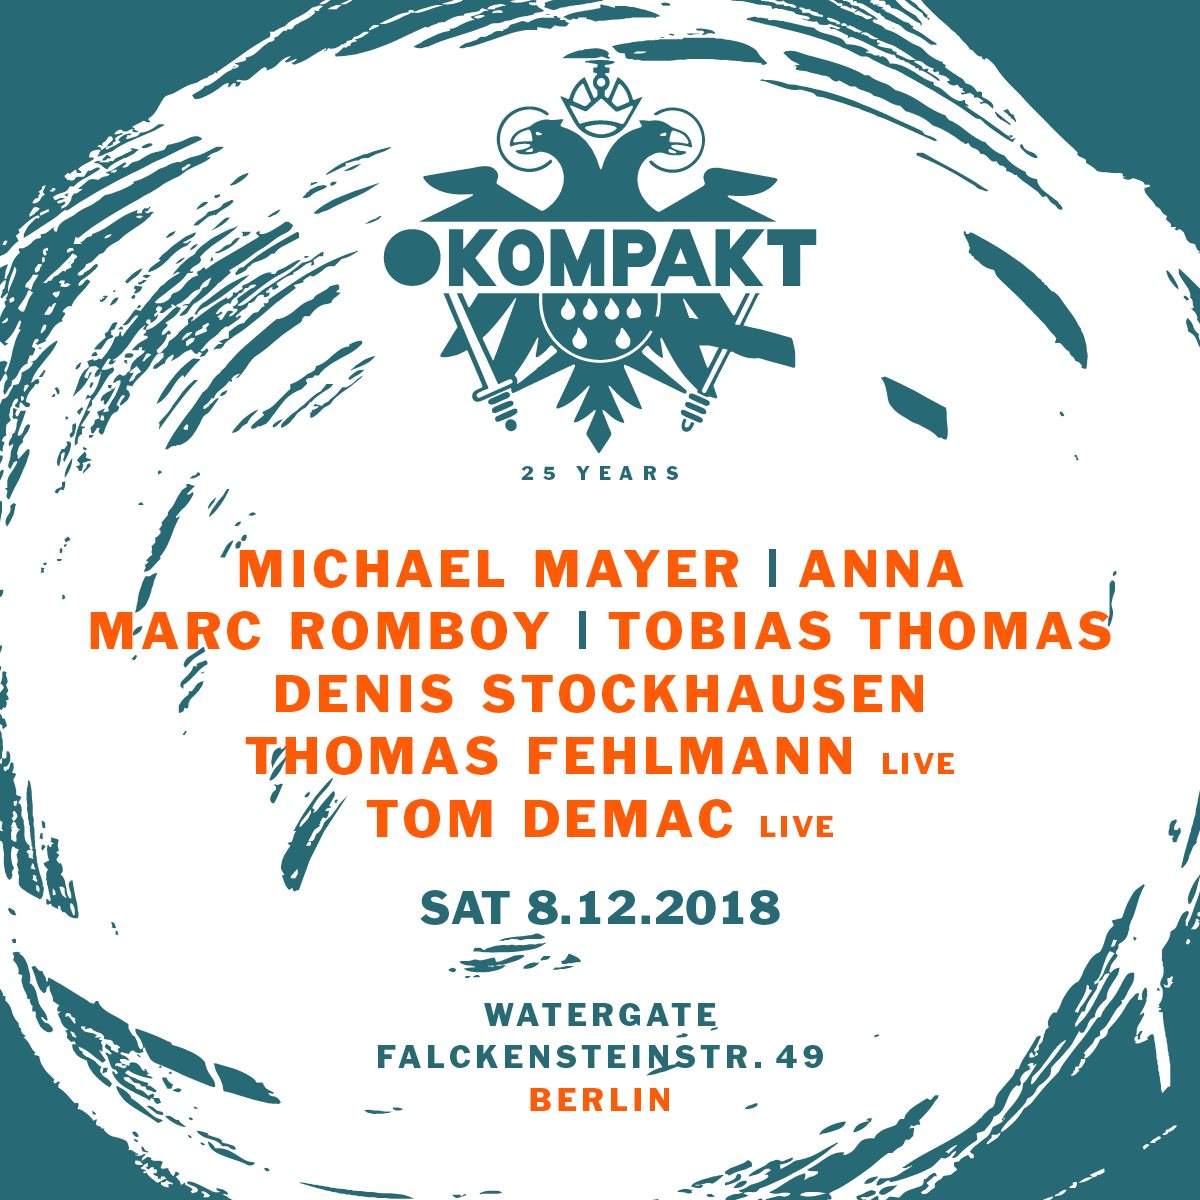 25 yrs of Kompakt Night with Michael Mayer, Anna, Marc Romboy - フライヤー表